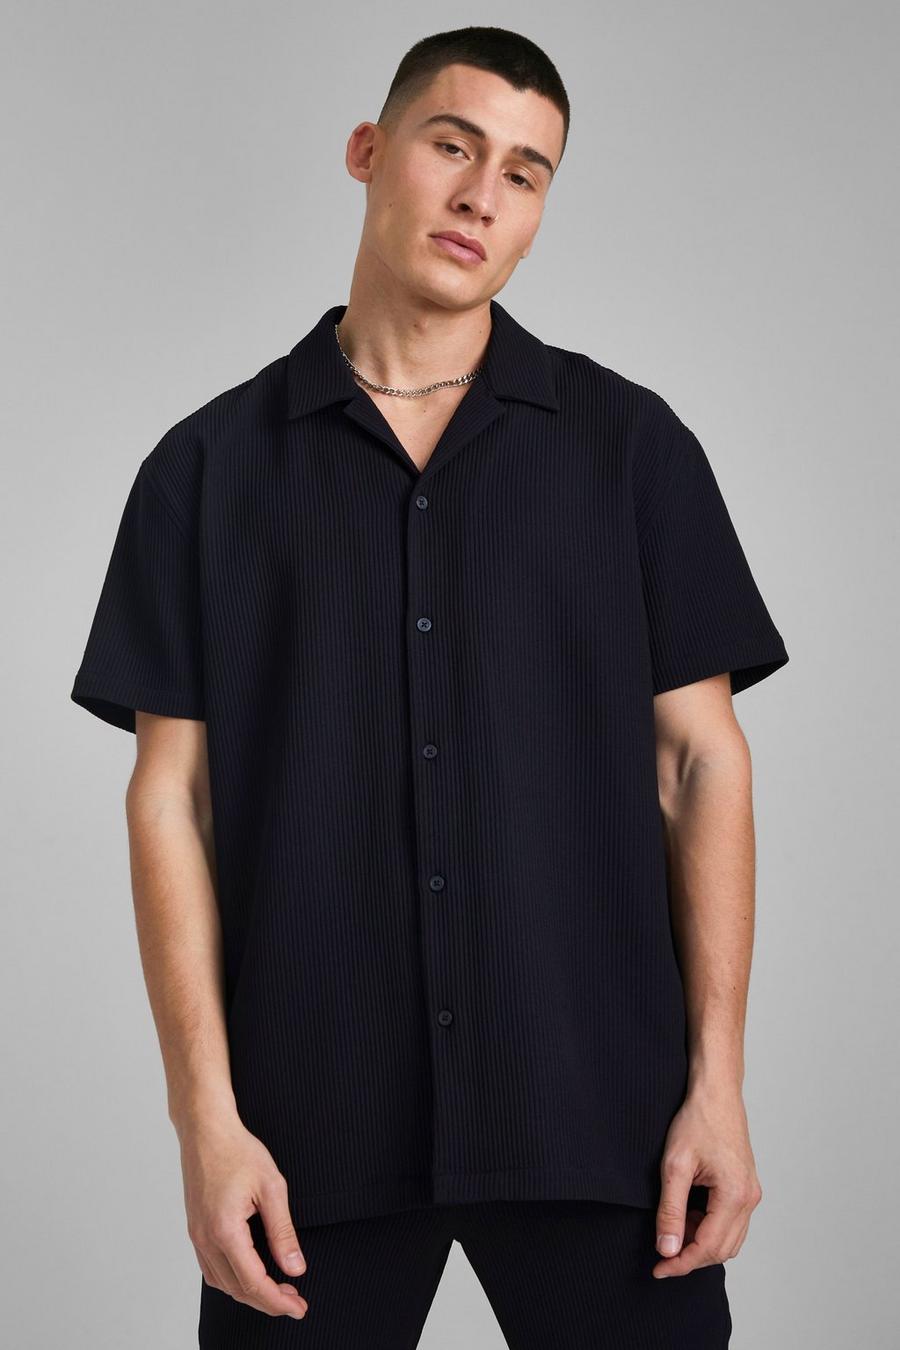 https://media.boohoo.com/i/boohoo/bmm12164_black_xl/male-black-short-sleeve-revere-oversized-pleated-shirt/?w=900&qlt=default&fmt.jp2.qlt=70&fmt=auto&sm=fit